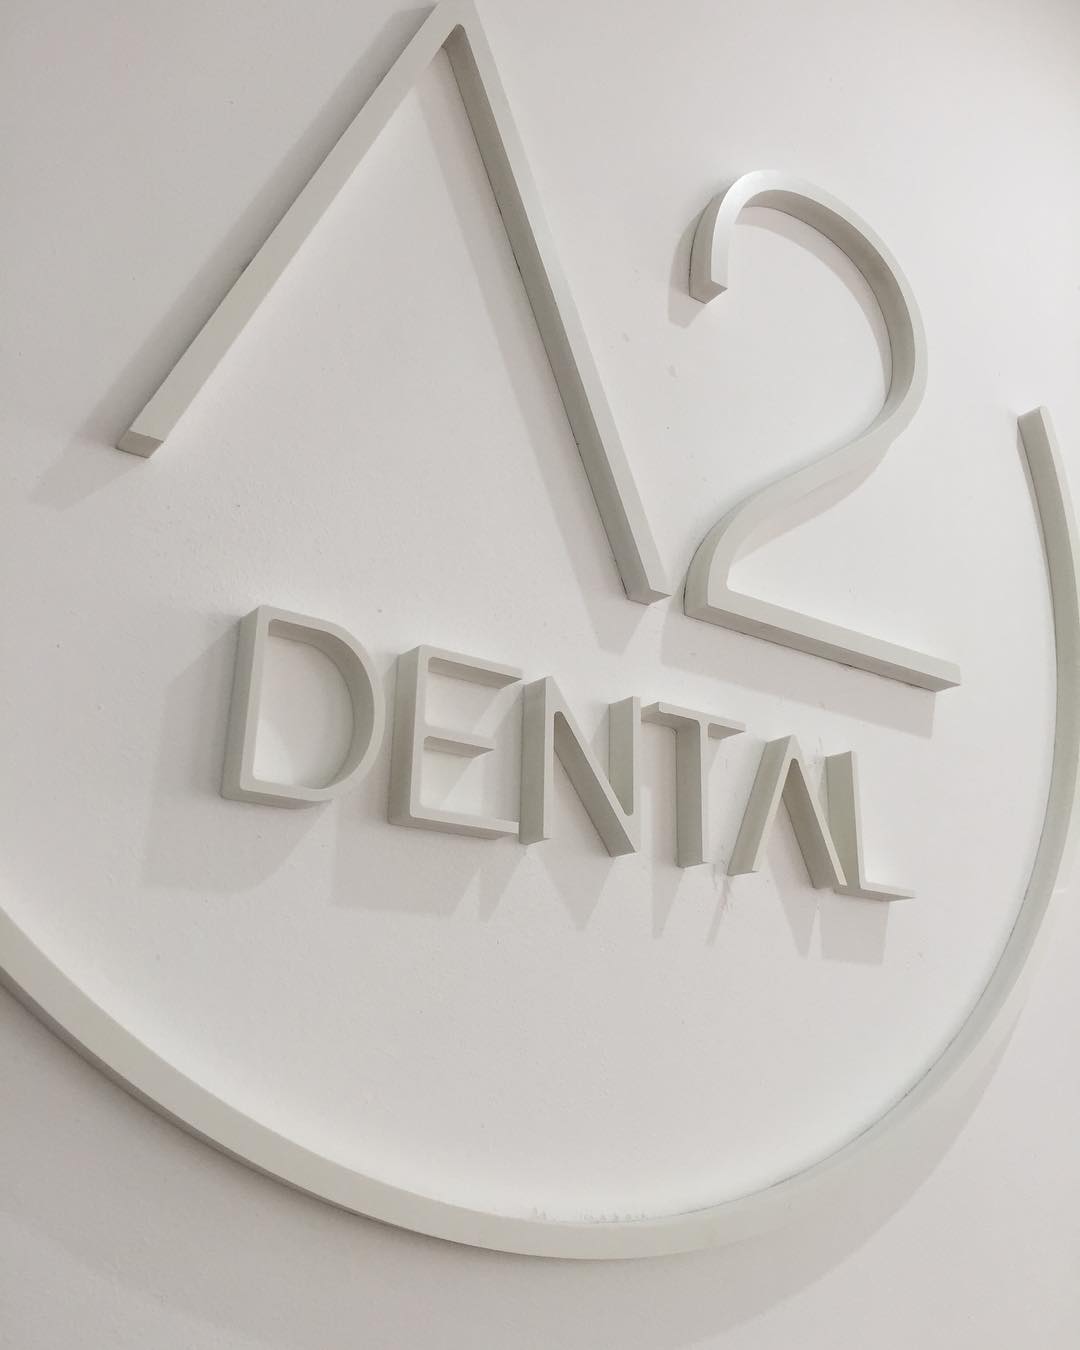 Letras corpóreas en PVC A2 Dental